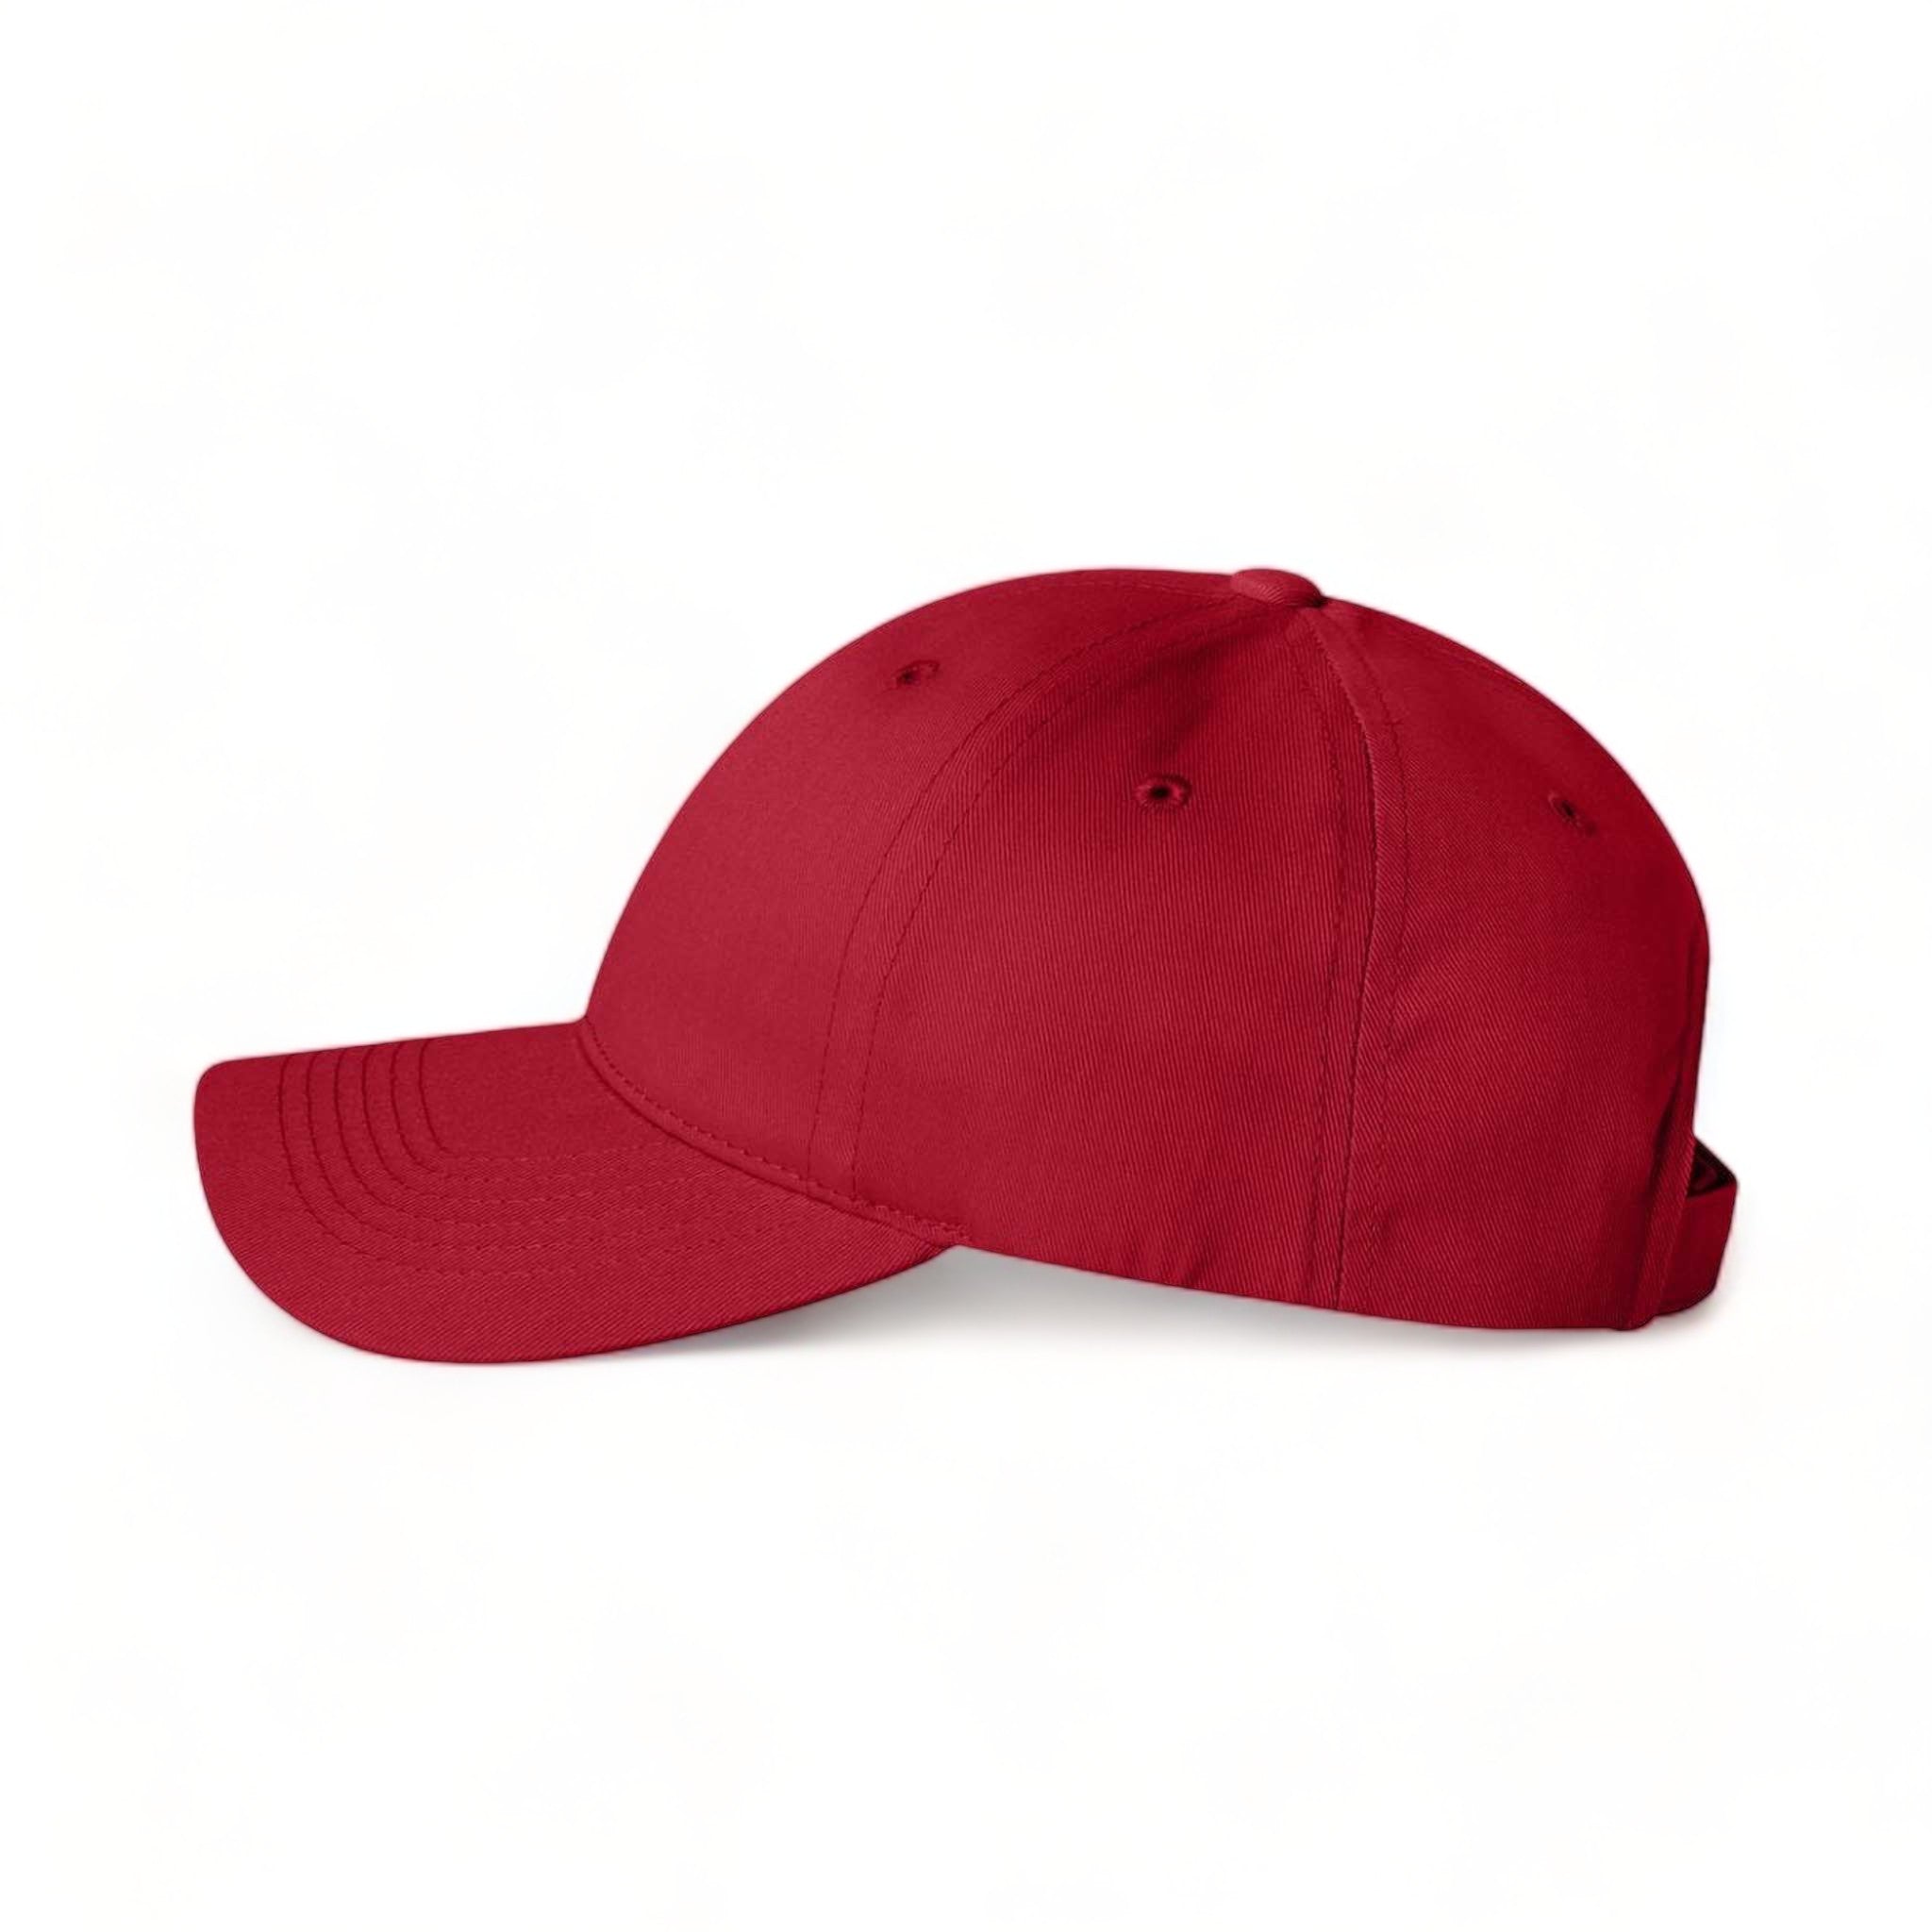 Side view of Sportsman 2260 custom hat in red